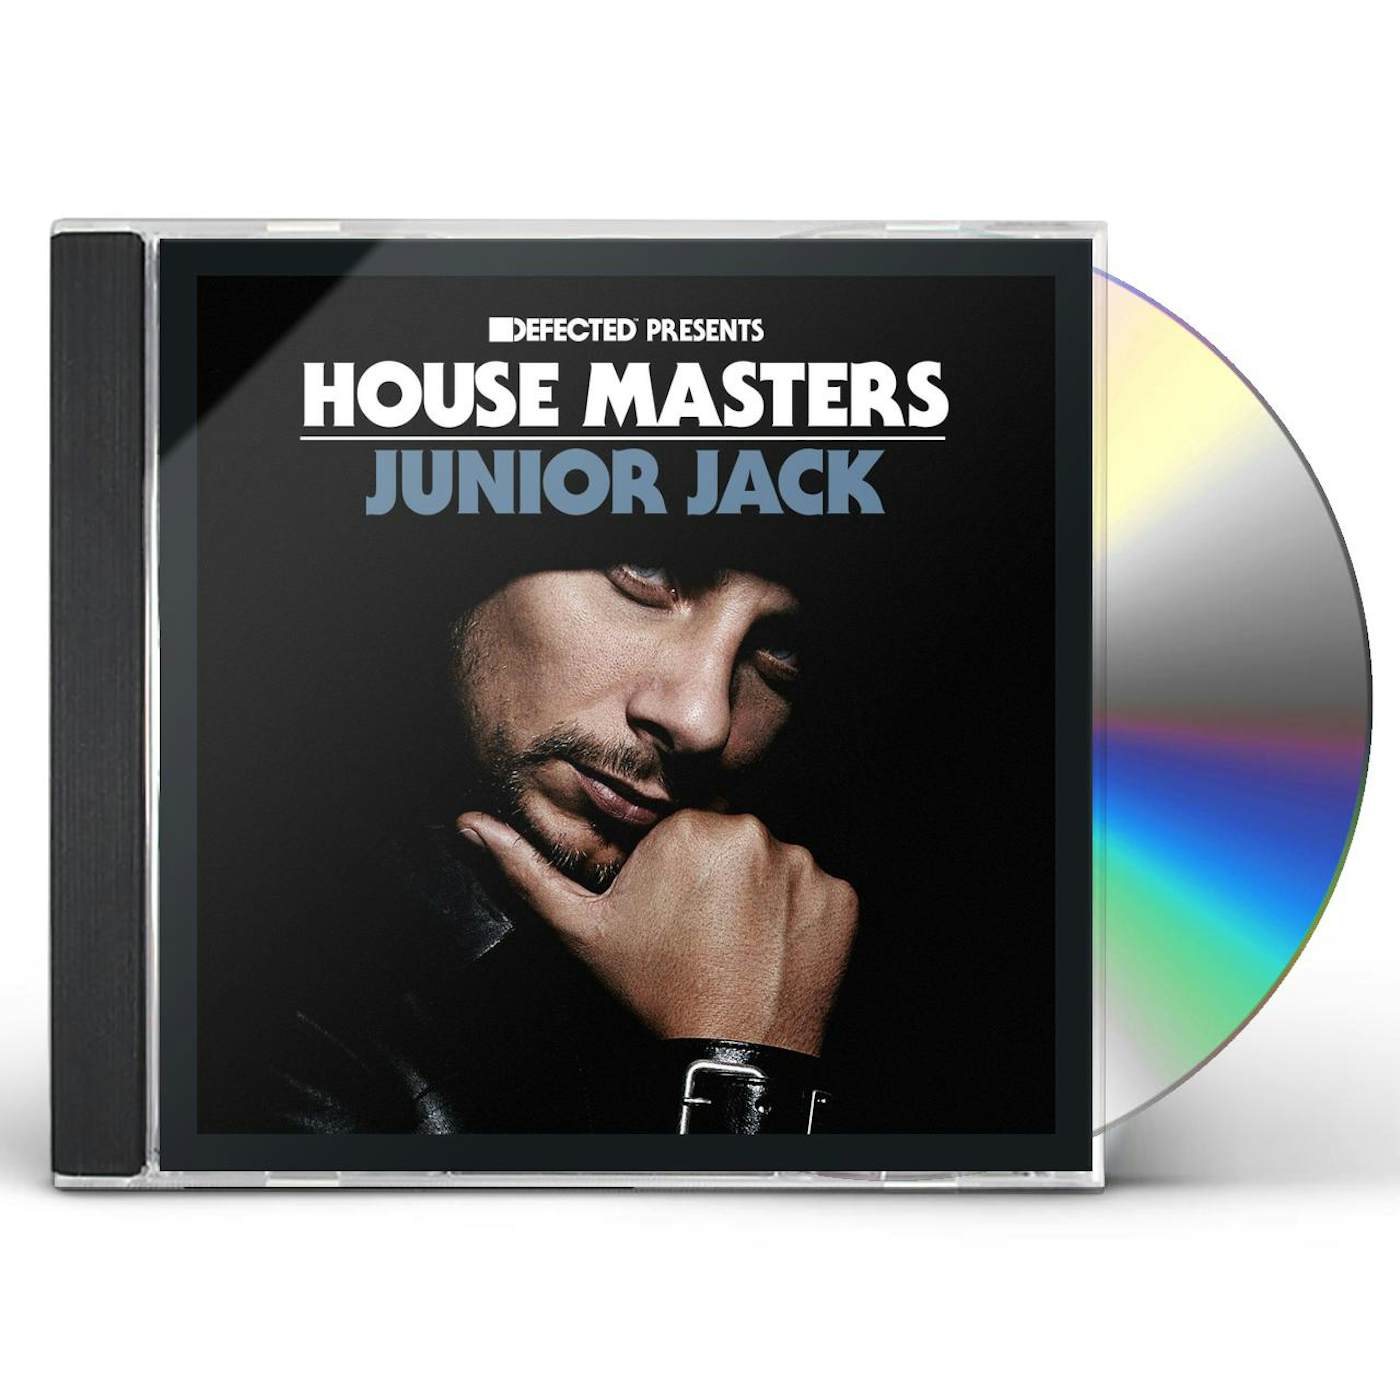 DEFECTED PRESENTS HOUSE MASTERS: JUNIOR JACK CD